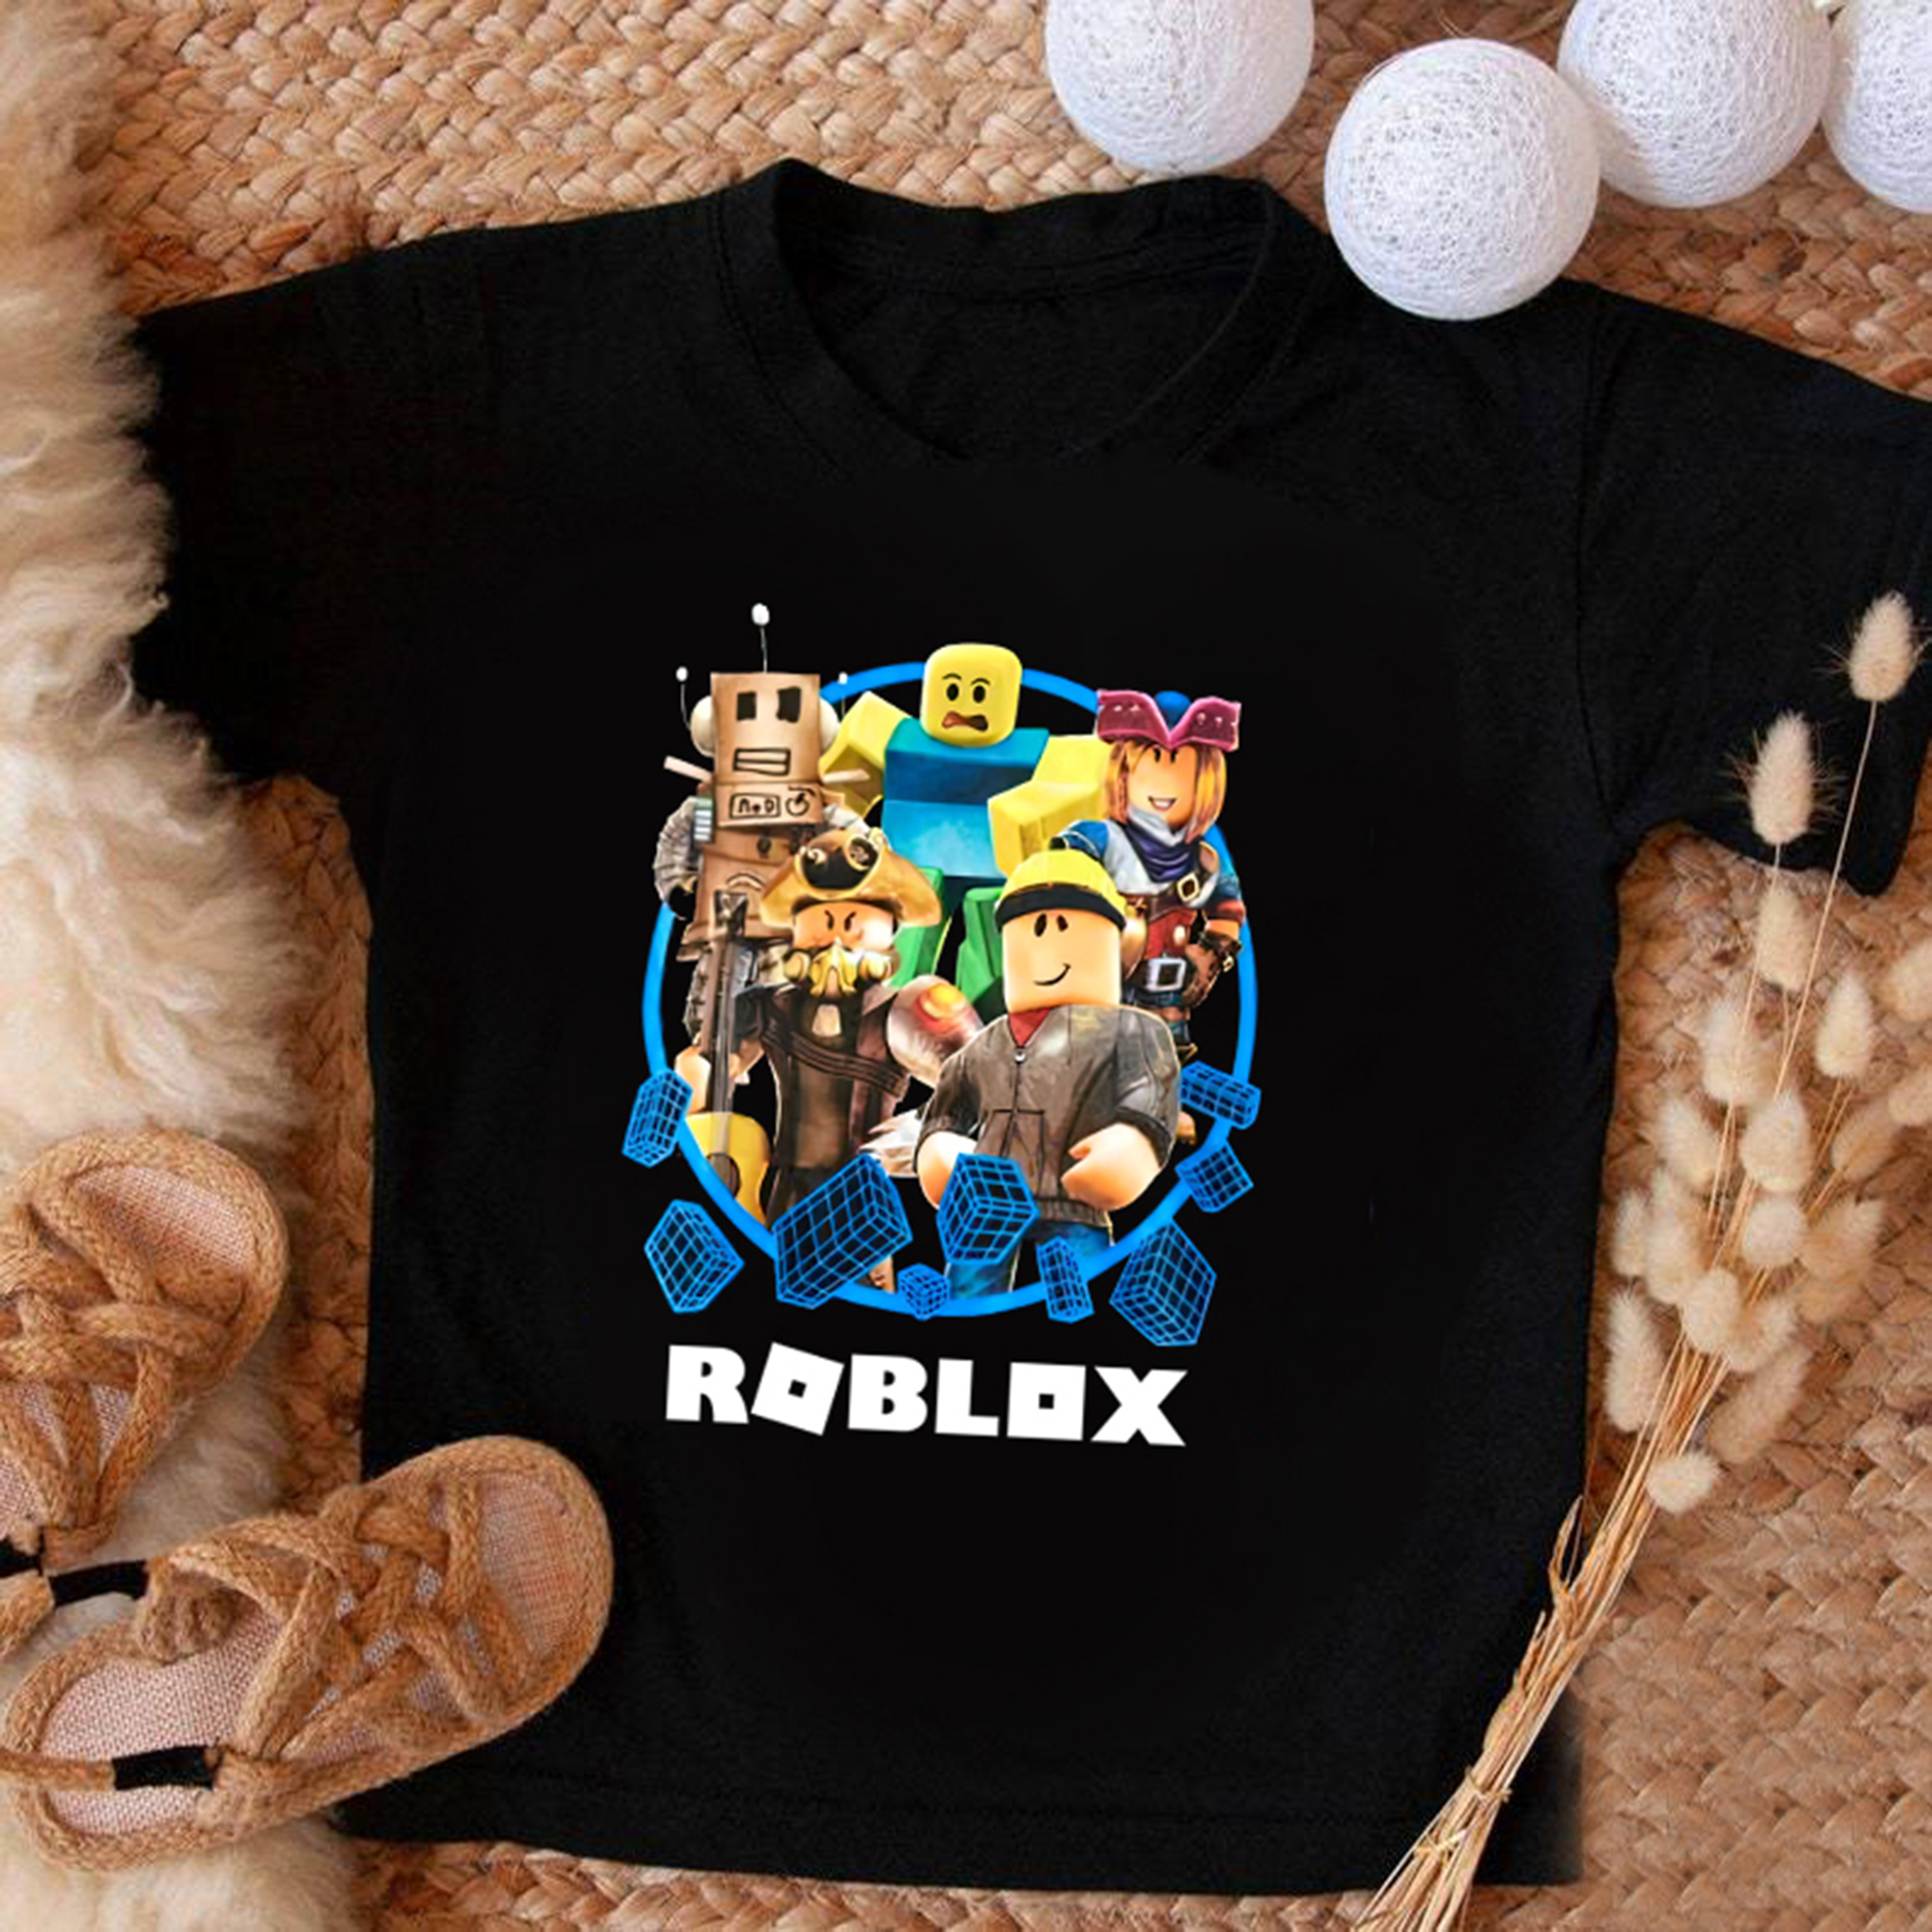 Roblox Shirt, Mens Women Kids Xmas T Shirt Unisex Shirt, Roblox Birthday Shirt, Roblox Gift